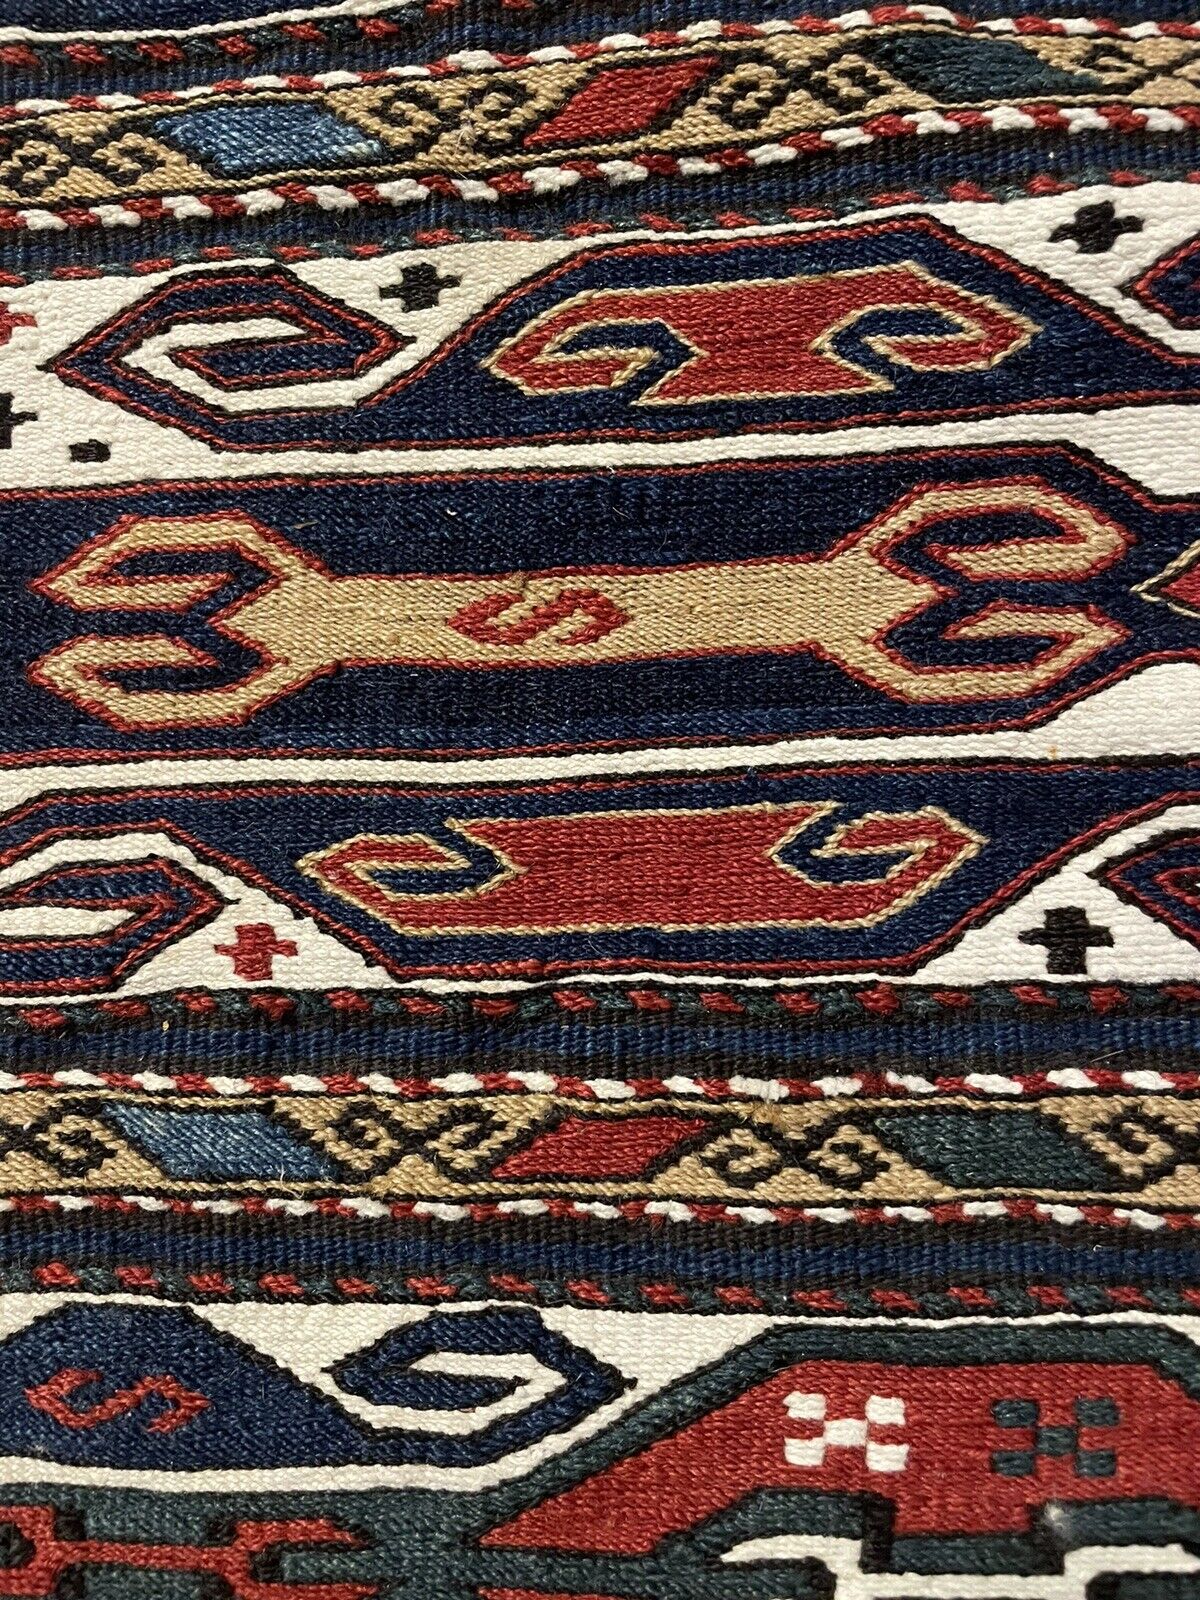 Close-up of Sumak design on Handmade Antique Persian Sumak Collectible Kilim - Detailed view showcasing the traditional Sumak design of the kilim.